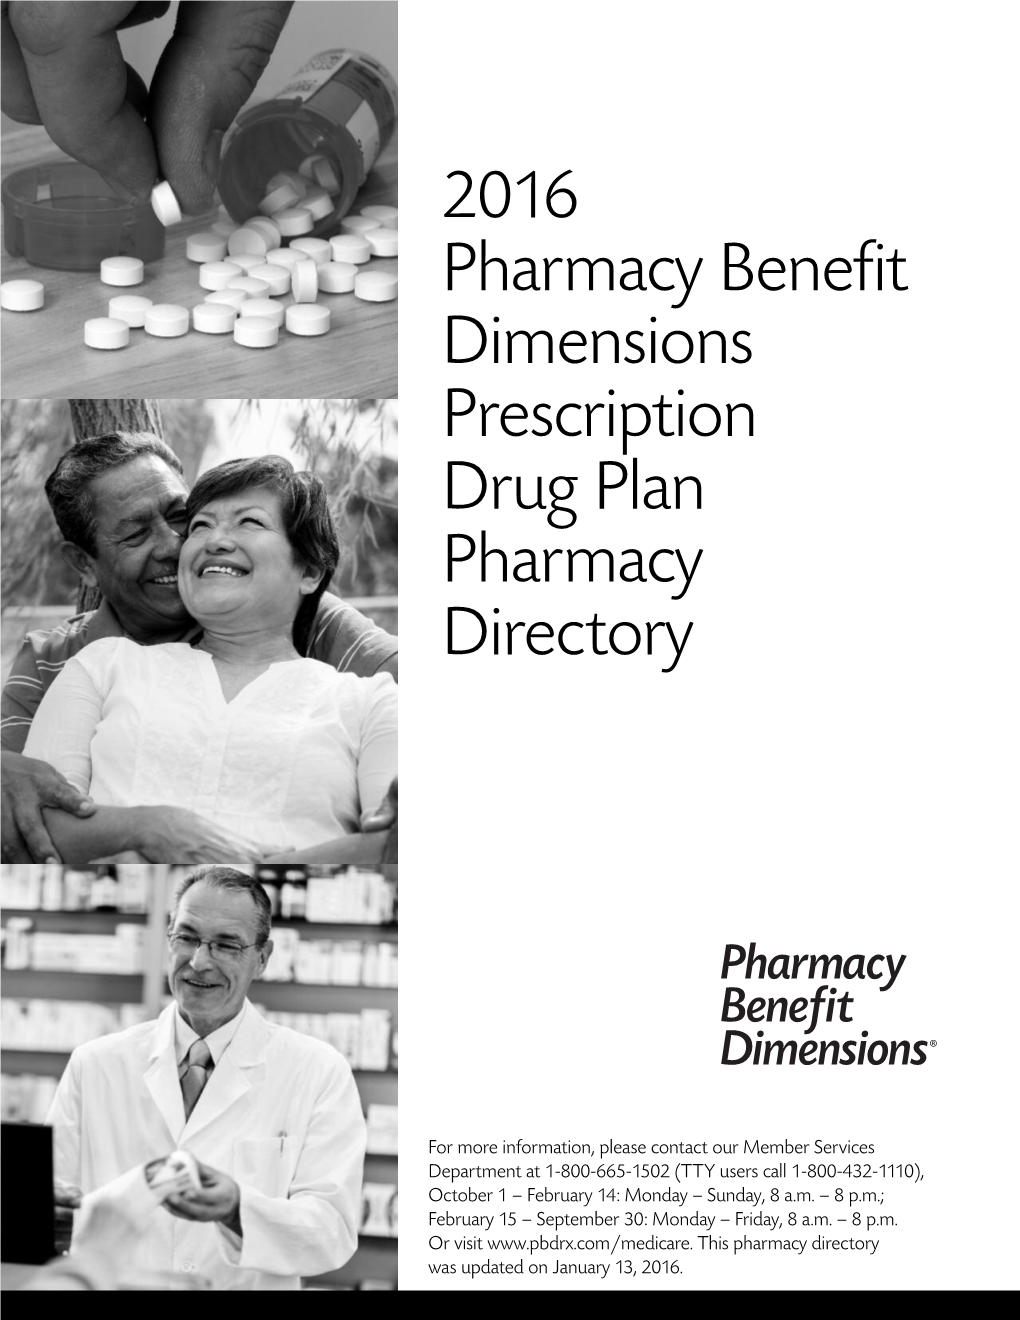 2016 Pharmacy Benefit Dimensions Prescription Drug Plan Pharmacy Directory